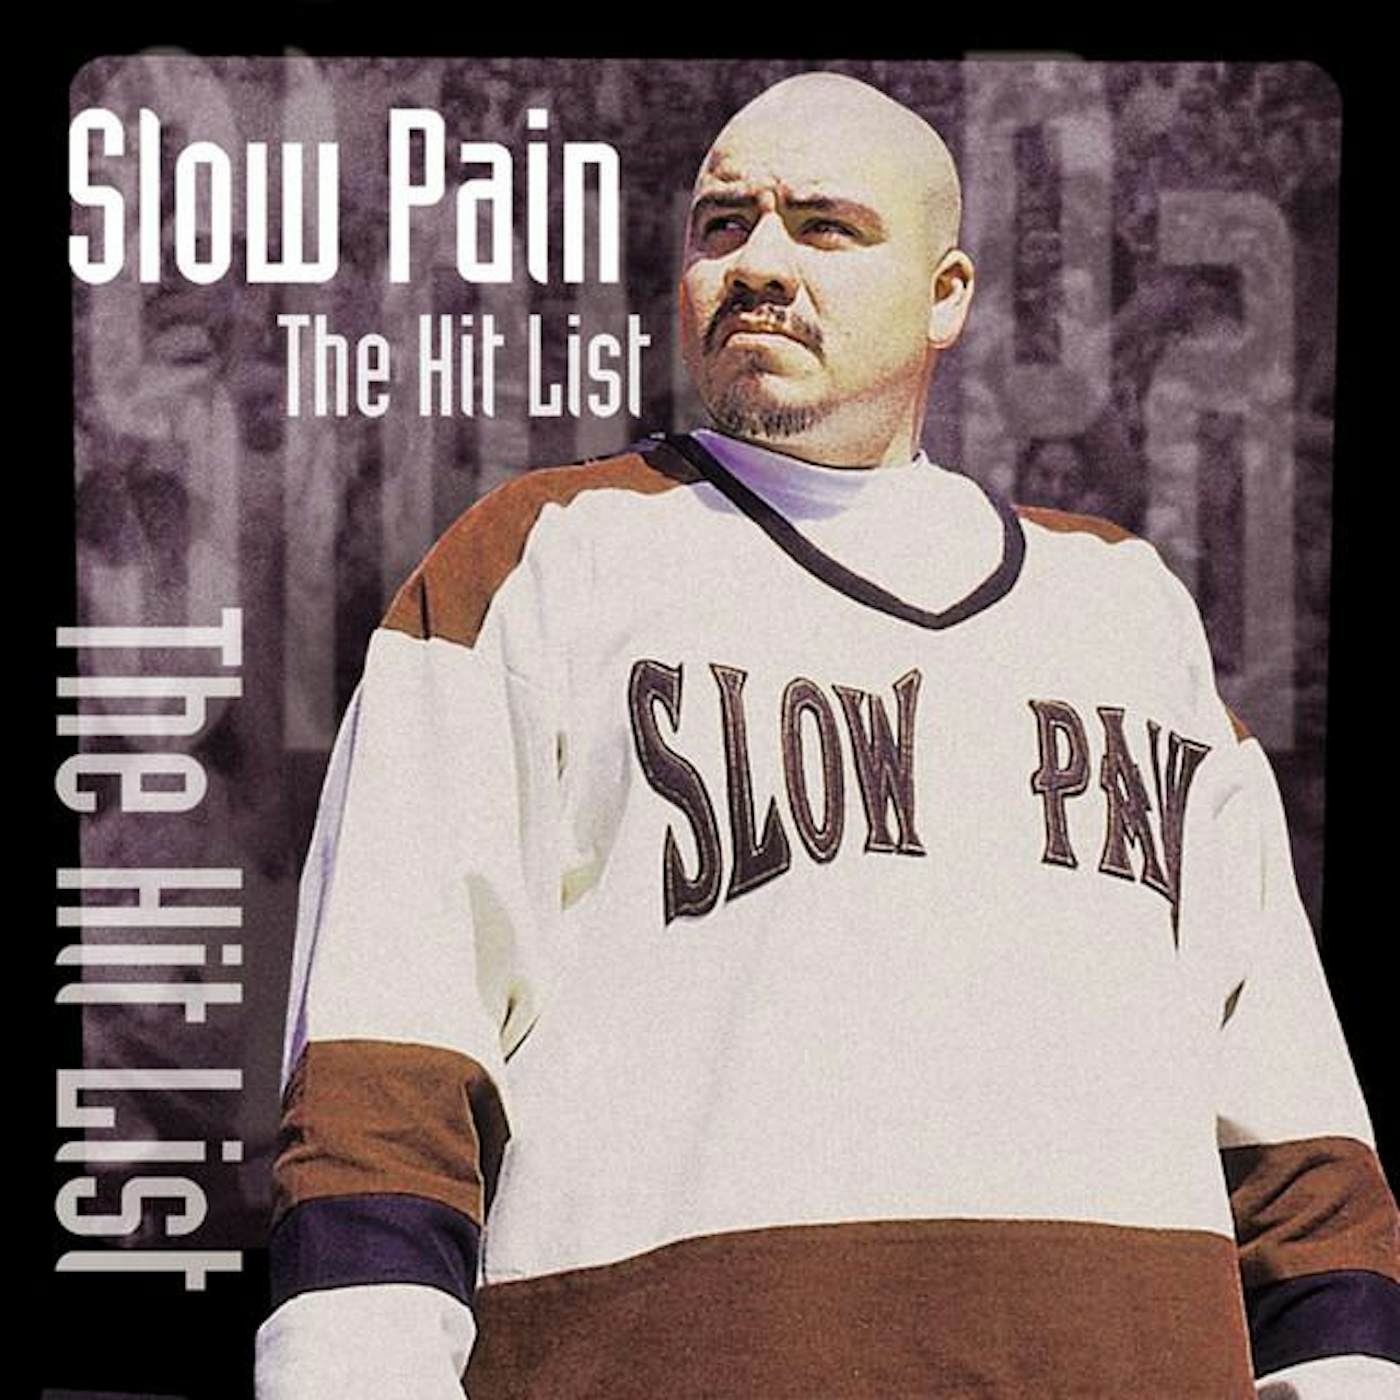 Slow Pain